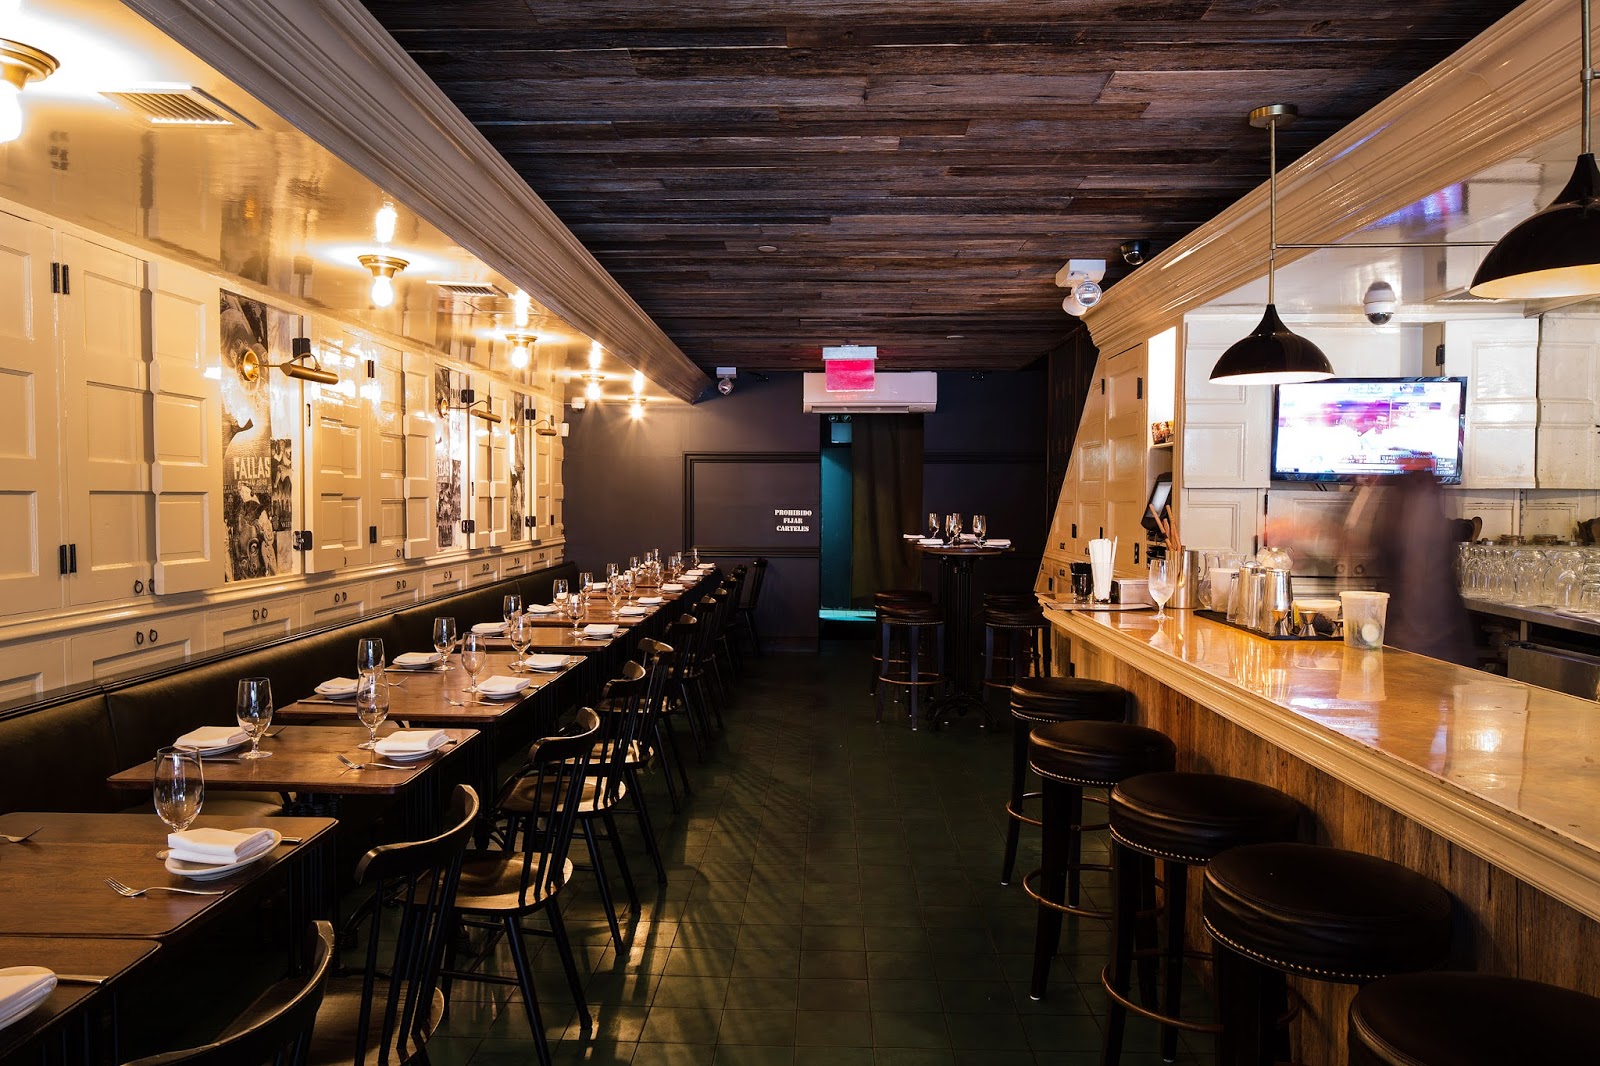 Photo of SOCARRAT Paella Bar - Nolita in New York City, New York, United States - 2 Picture of Restaurant, Food, Point of interest, Establishment